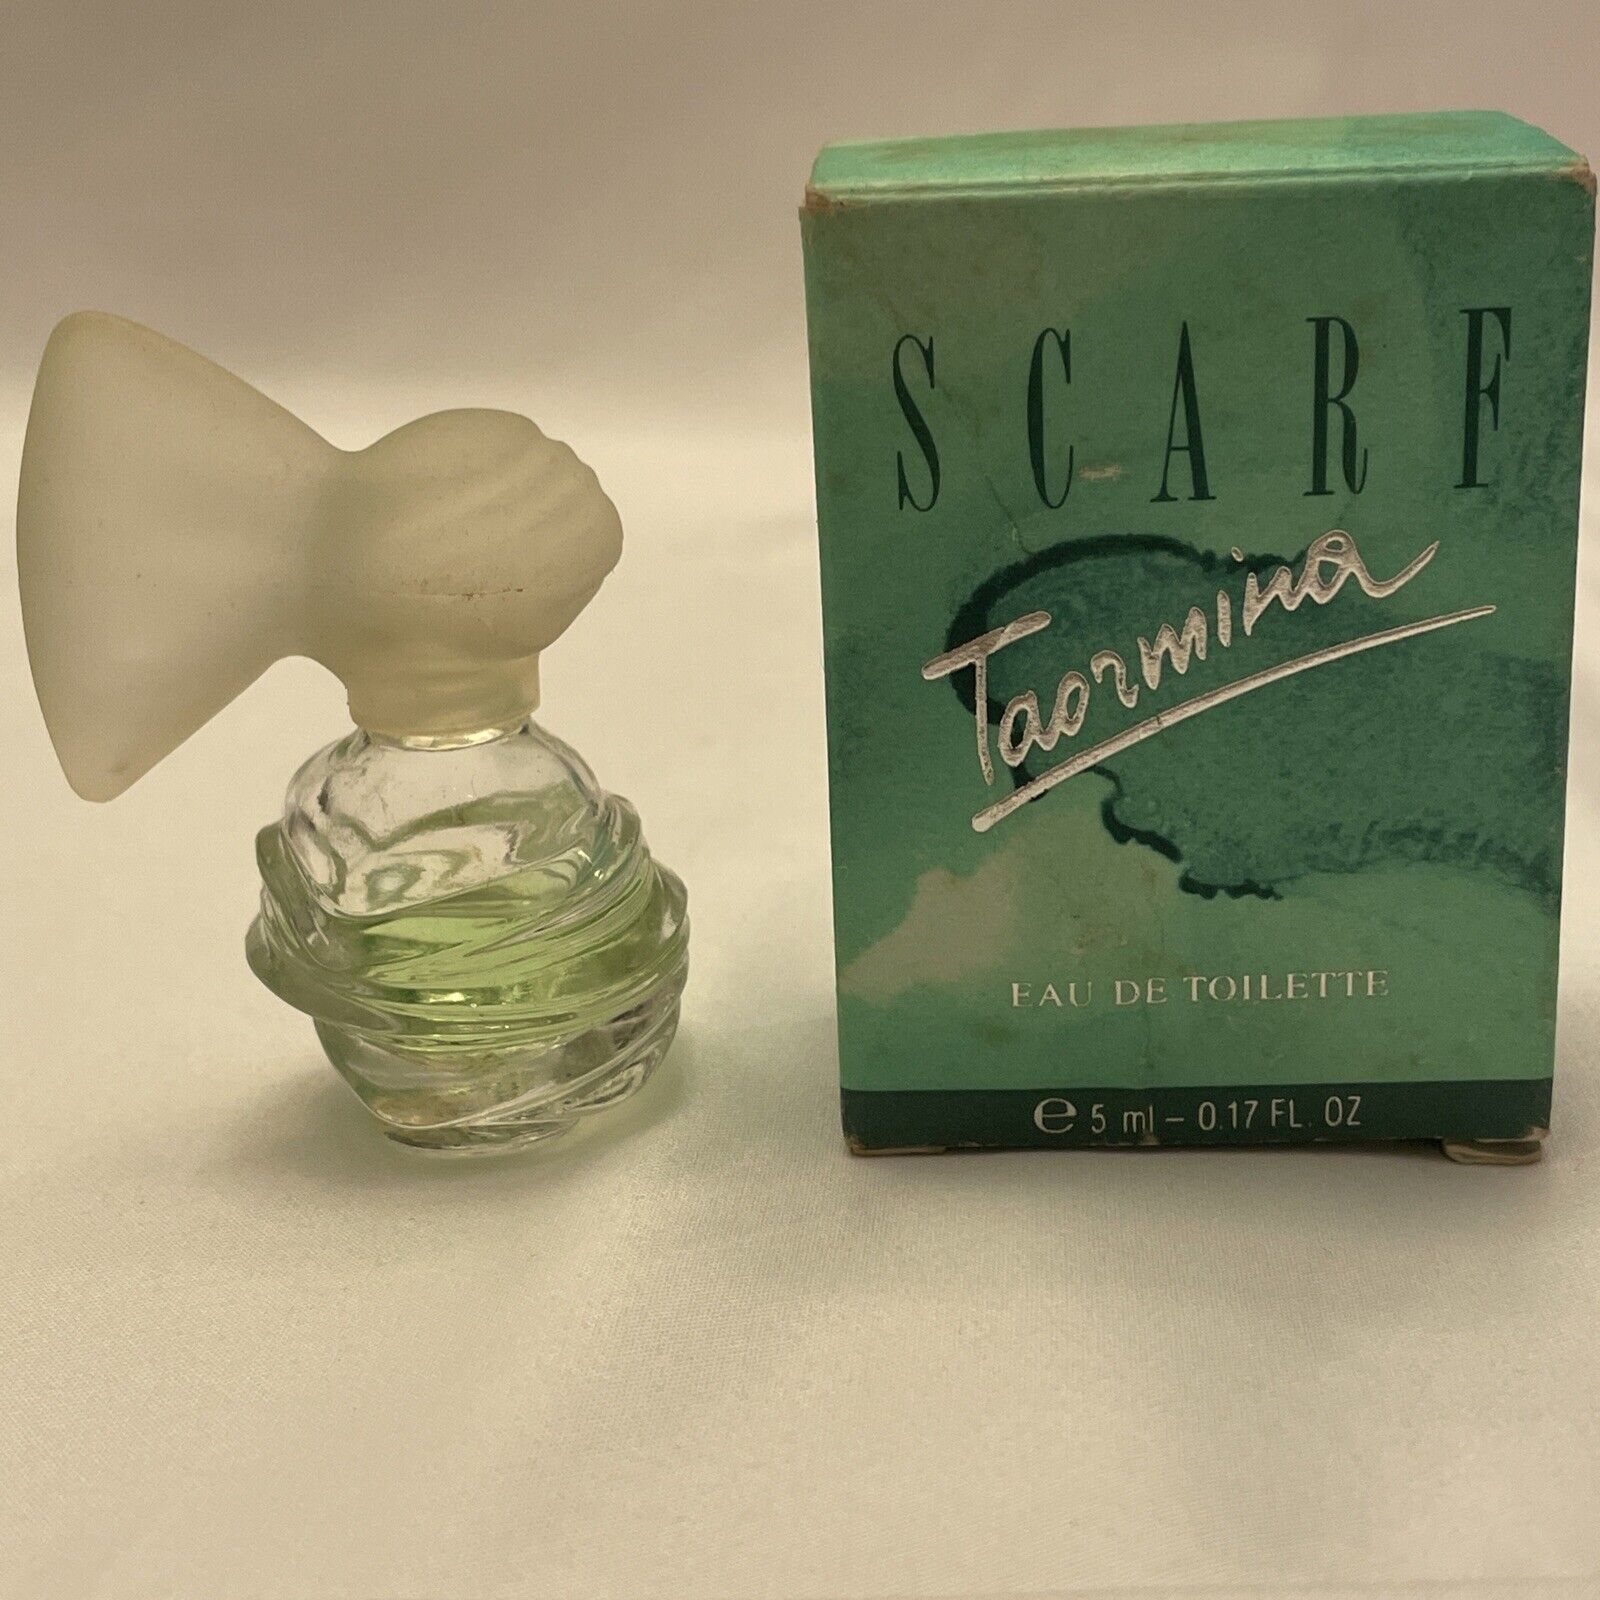 Vintage Marbert Scarf Taormina Eau De Toilette Perfume 5ml